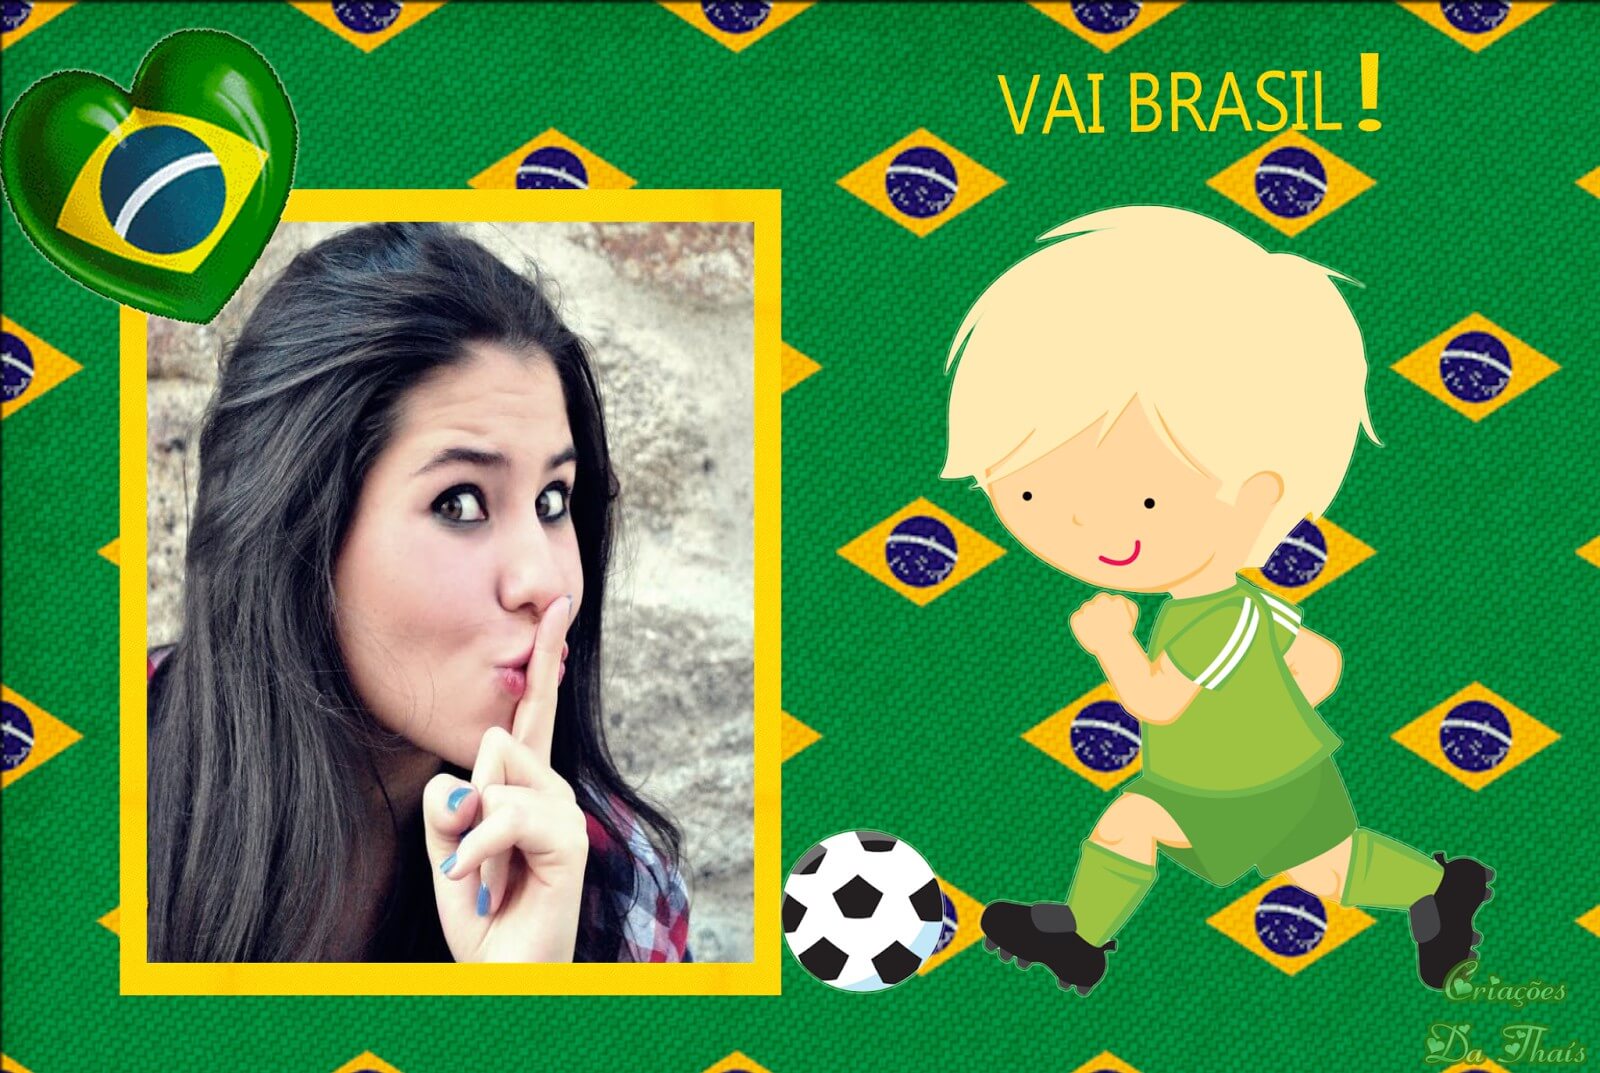 mundial-de-futebol-vai-brasil